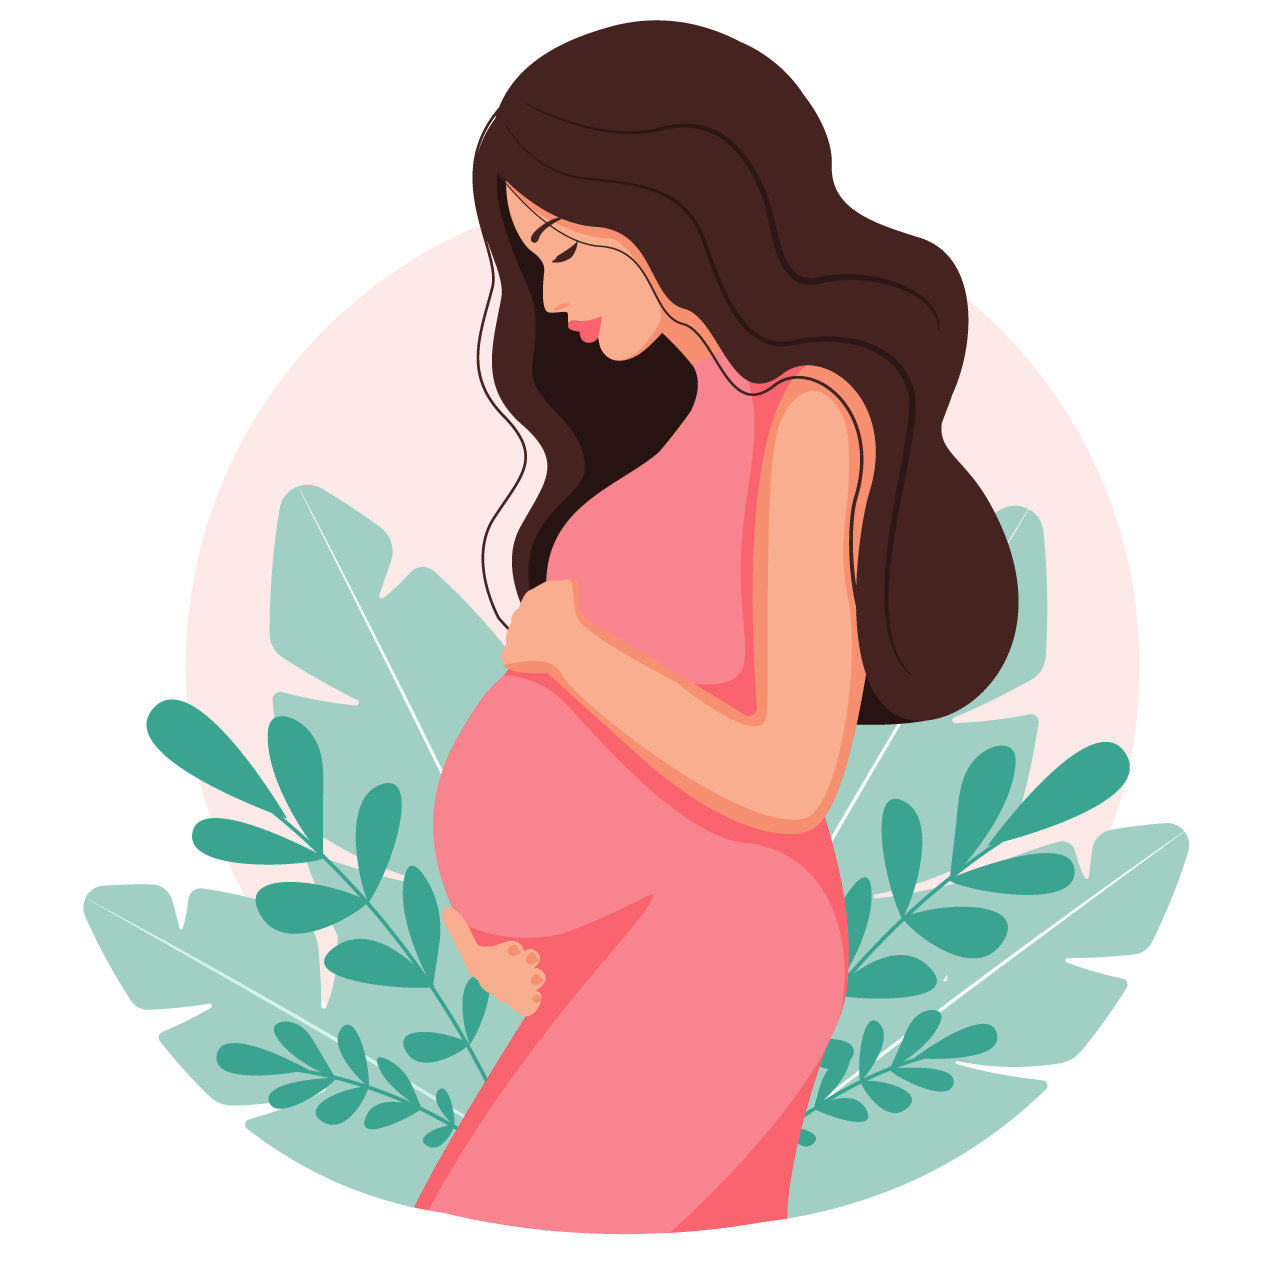 Modern illustration about pregnancy motherhood beautiful young woman with long hair minimal design illustration cartoon flat style